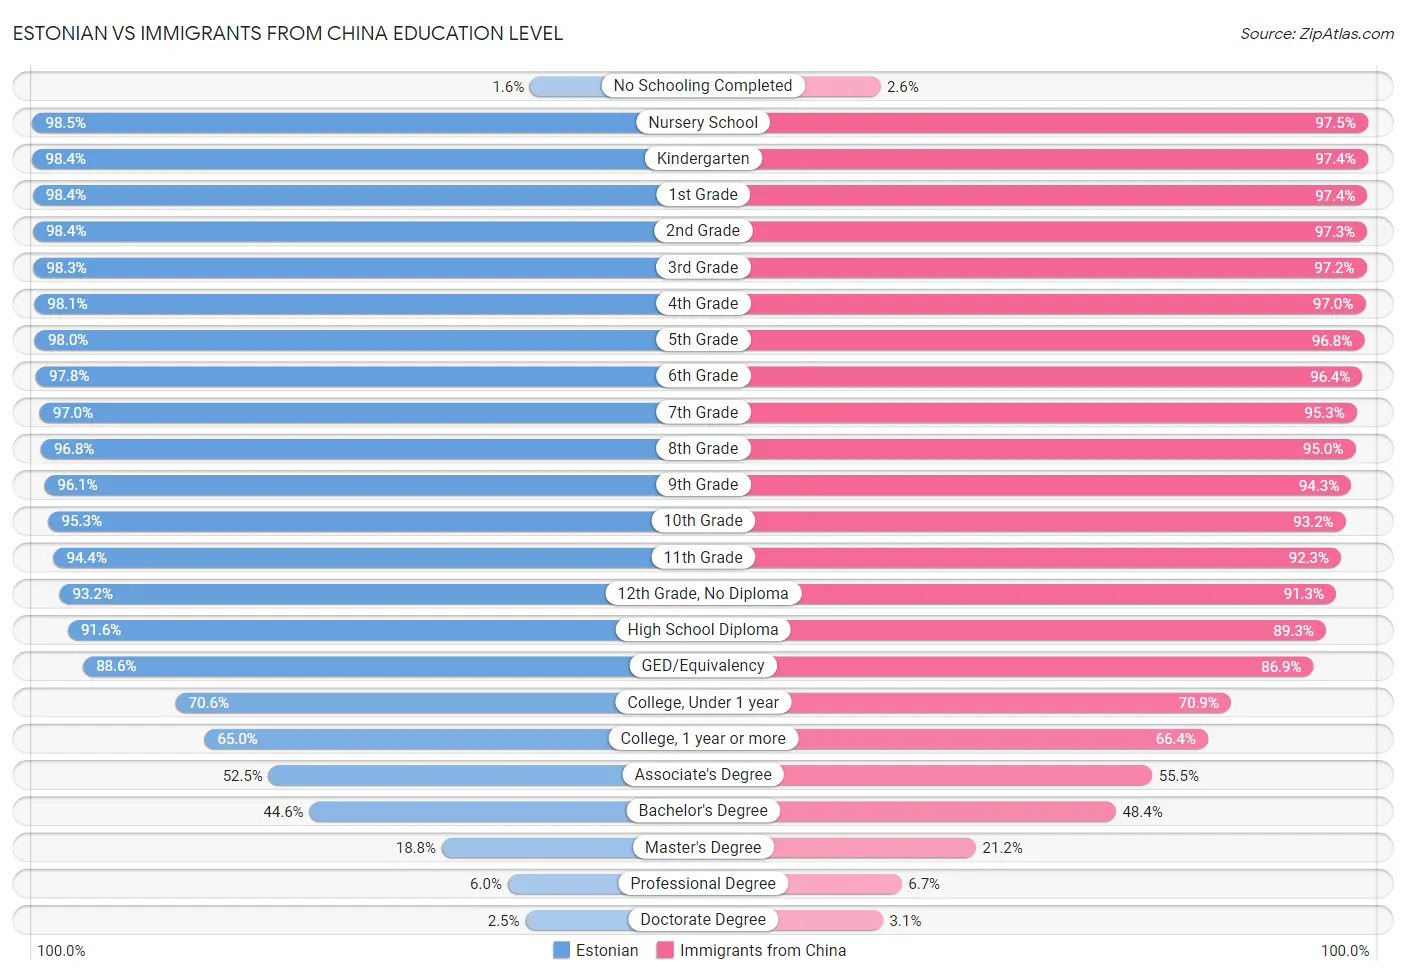 Estonian vs Immigrants from China Education Level